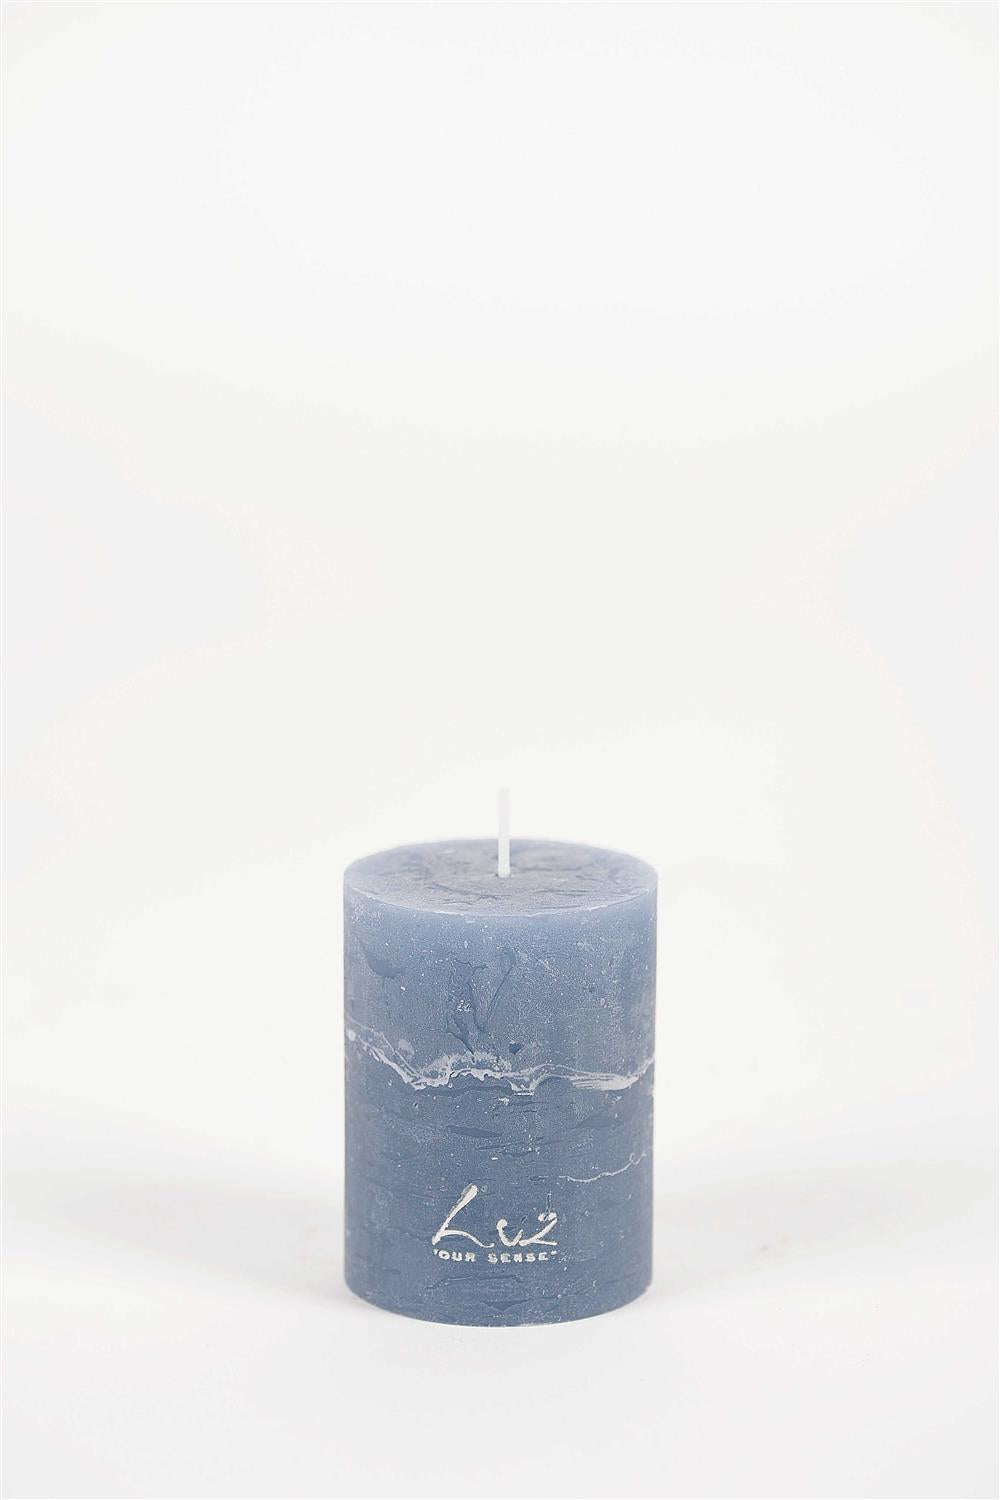 Luz Your Senses - Rustic Candle - Ocean Blue